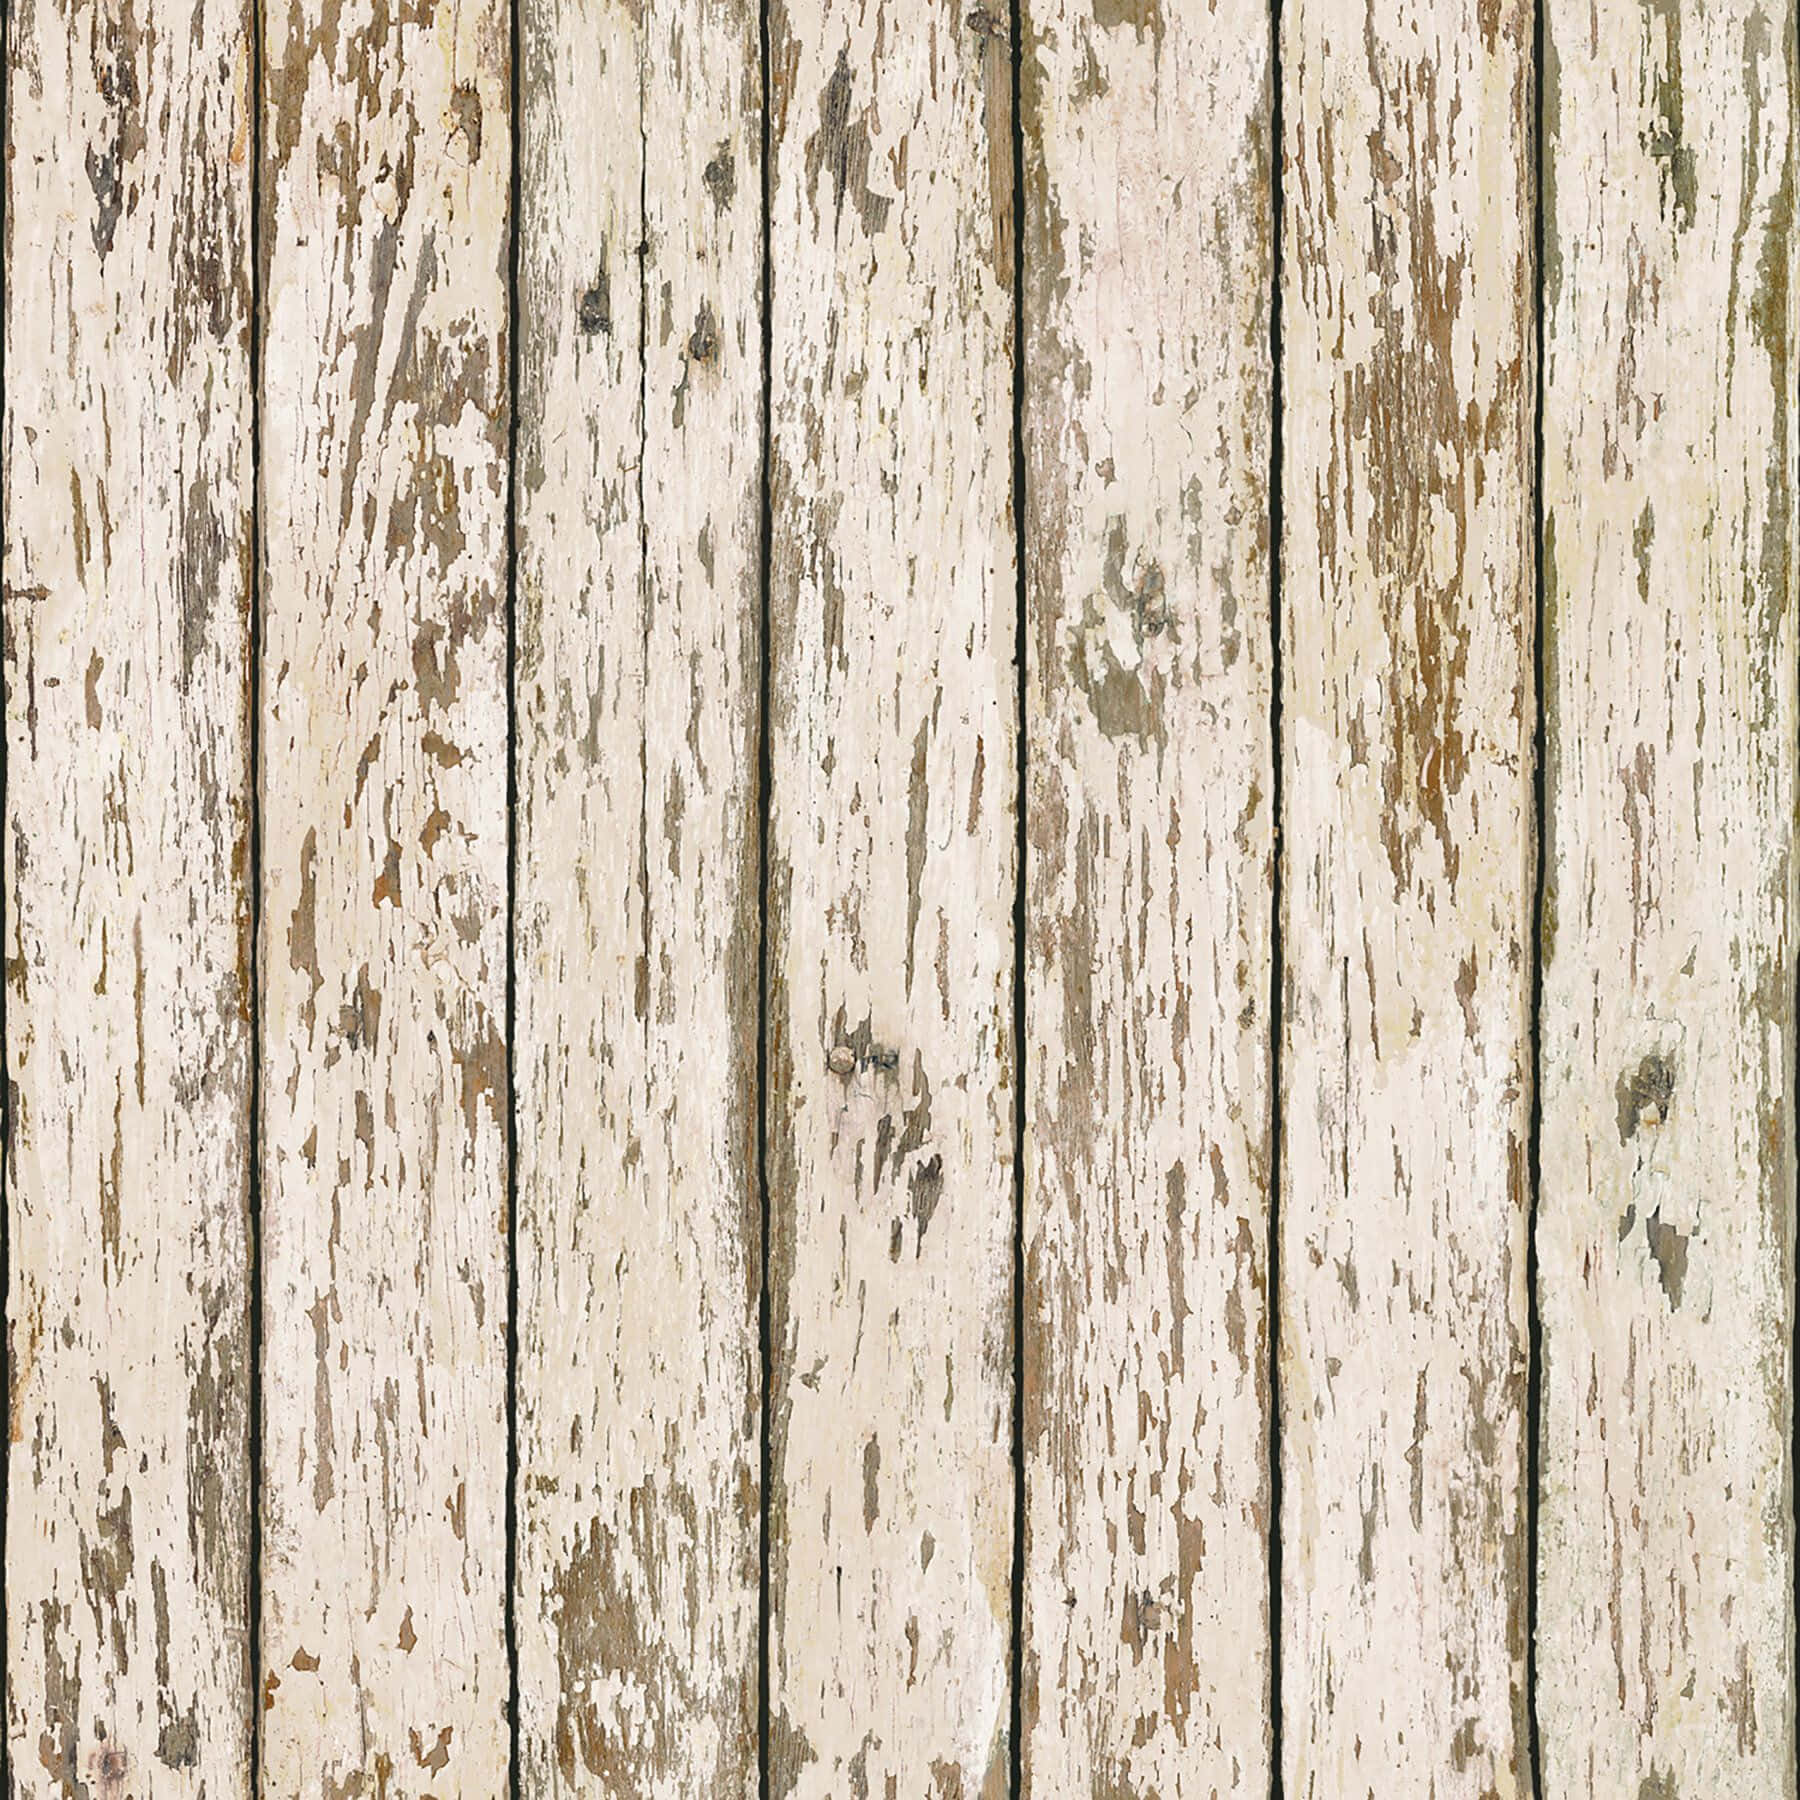 Reclaimed Wood Wallpaper - Peel and Stick Wallpaper - Use as Backsplash  peel stick or Shelf Paper - Removable Wallpaper - Plank Vintage Barnwood  Distressed Wallpaper (17.71